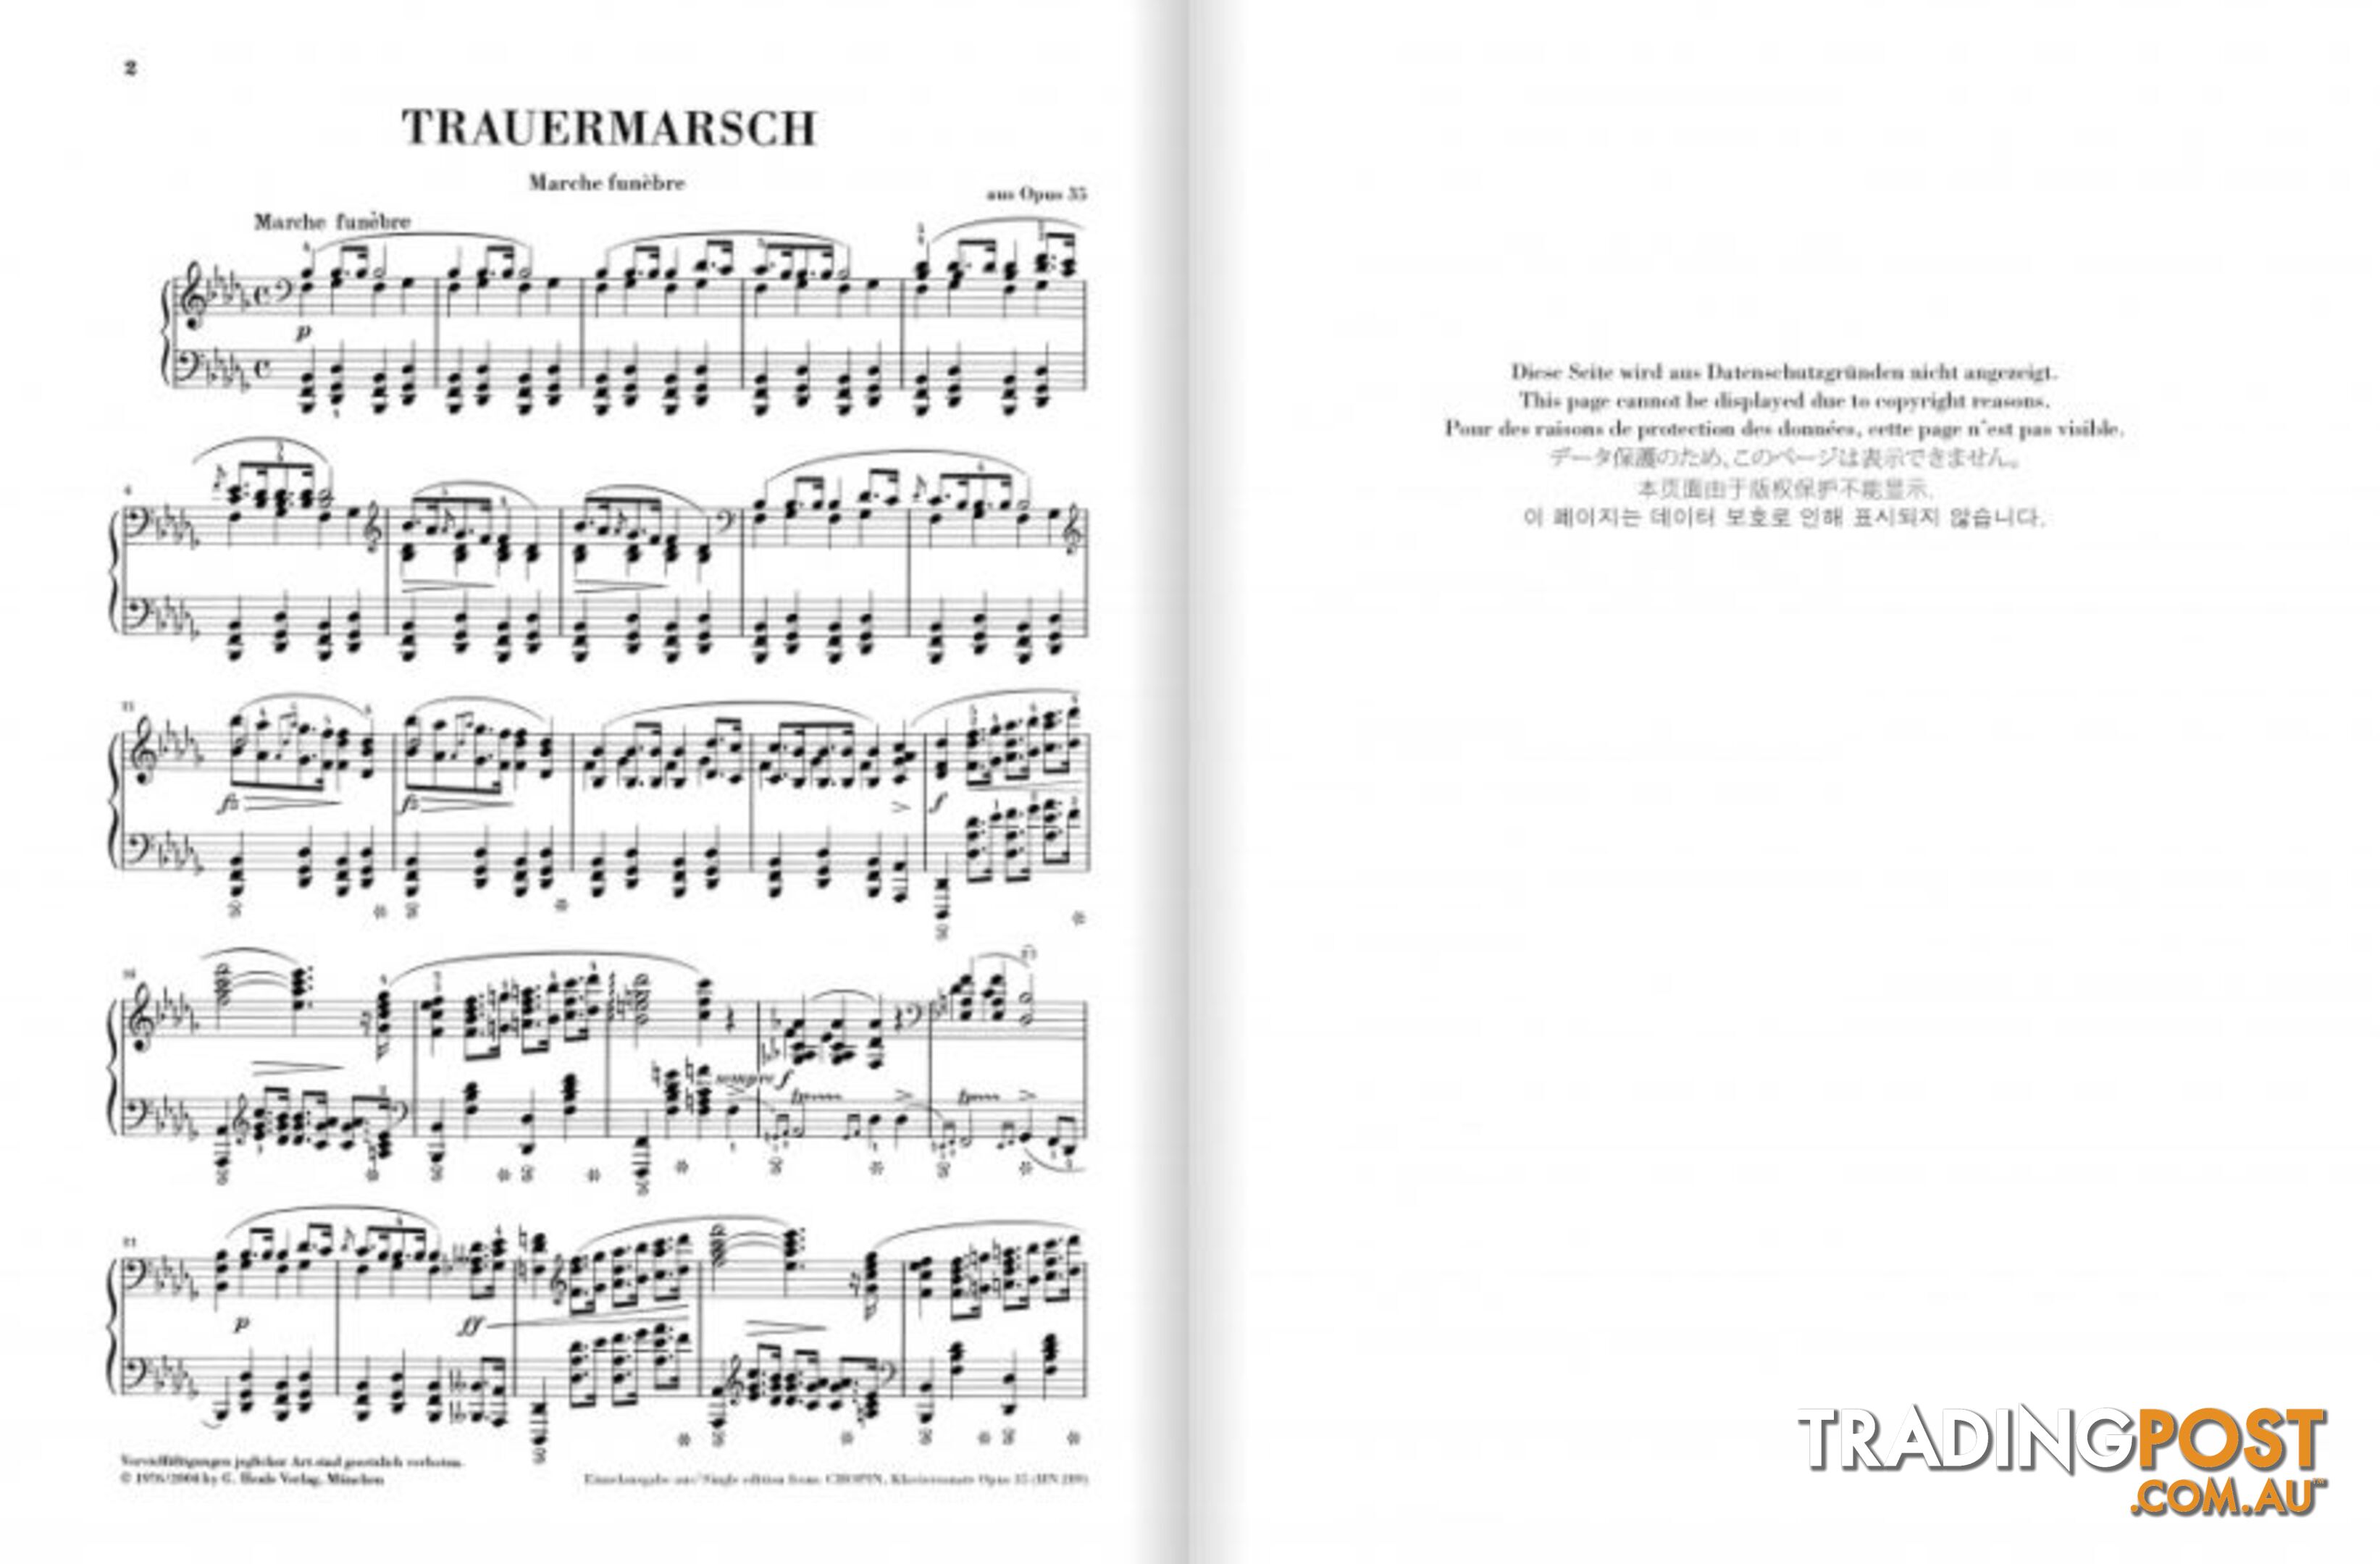 Chopin - Funeral March (Marche funebre) from Piano Sonata op. 35